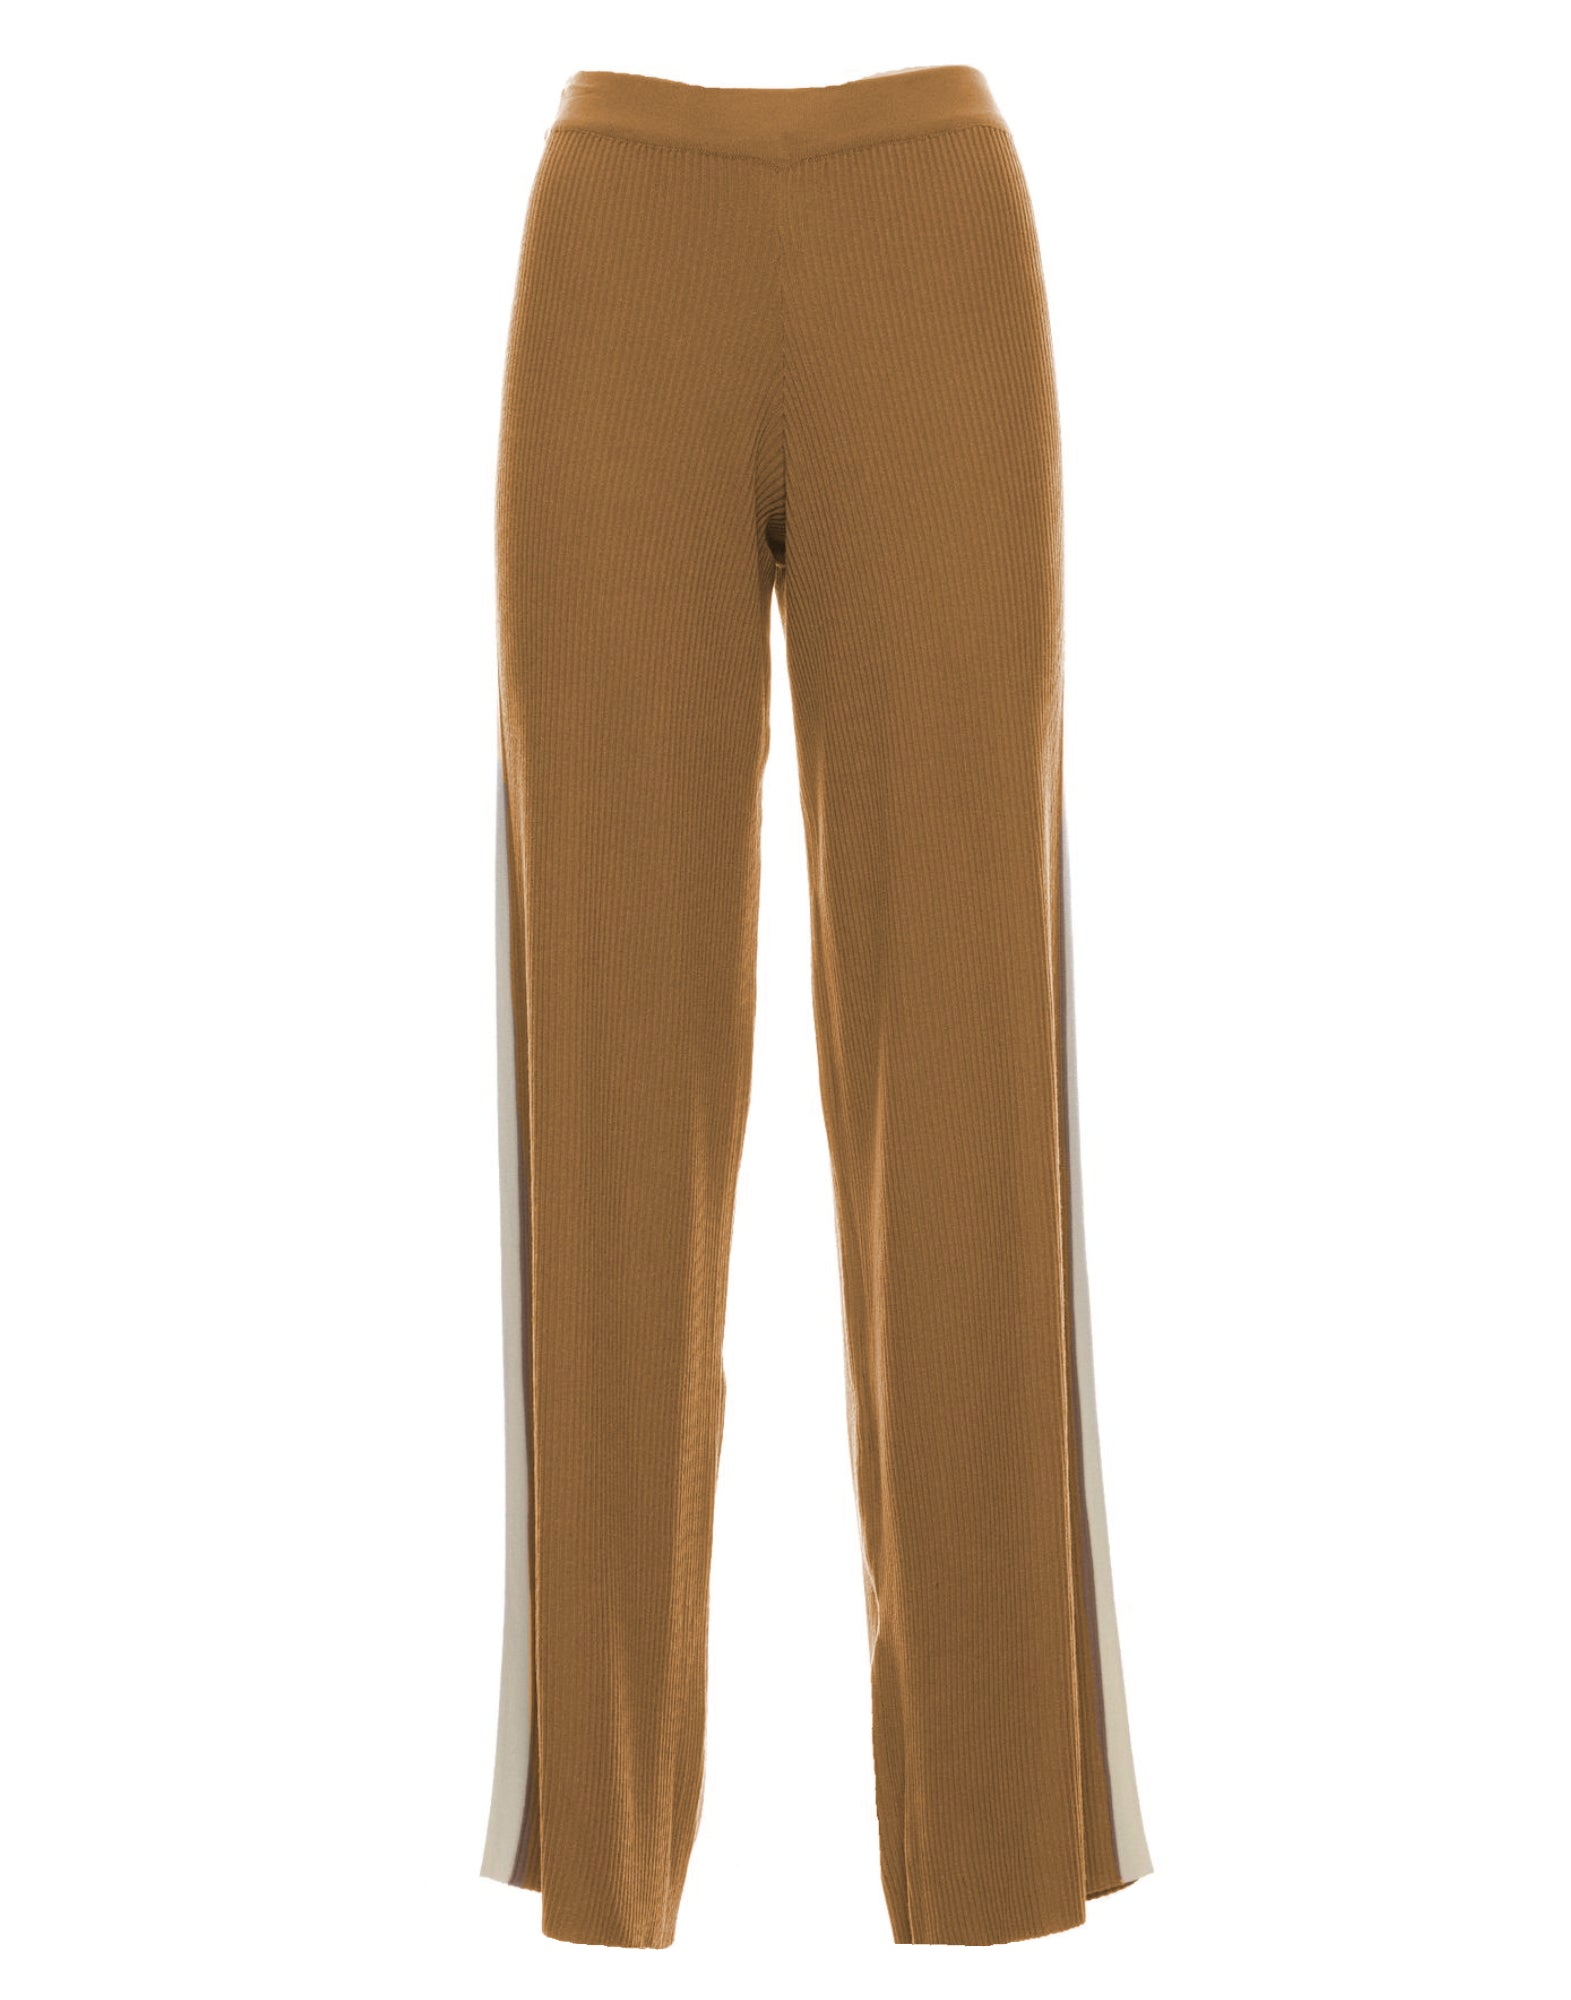 Pantalones mujer ptkd01018 beige Akep